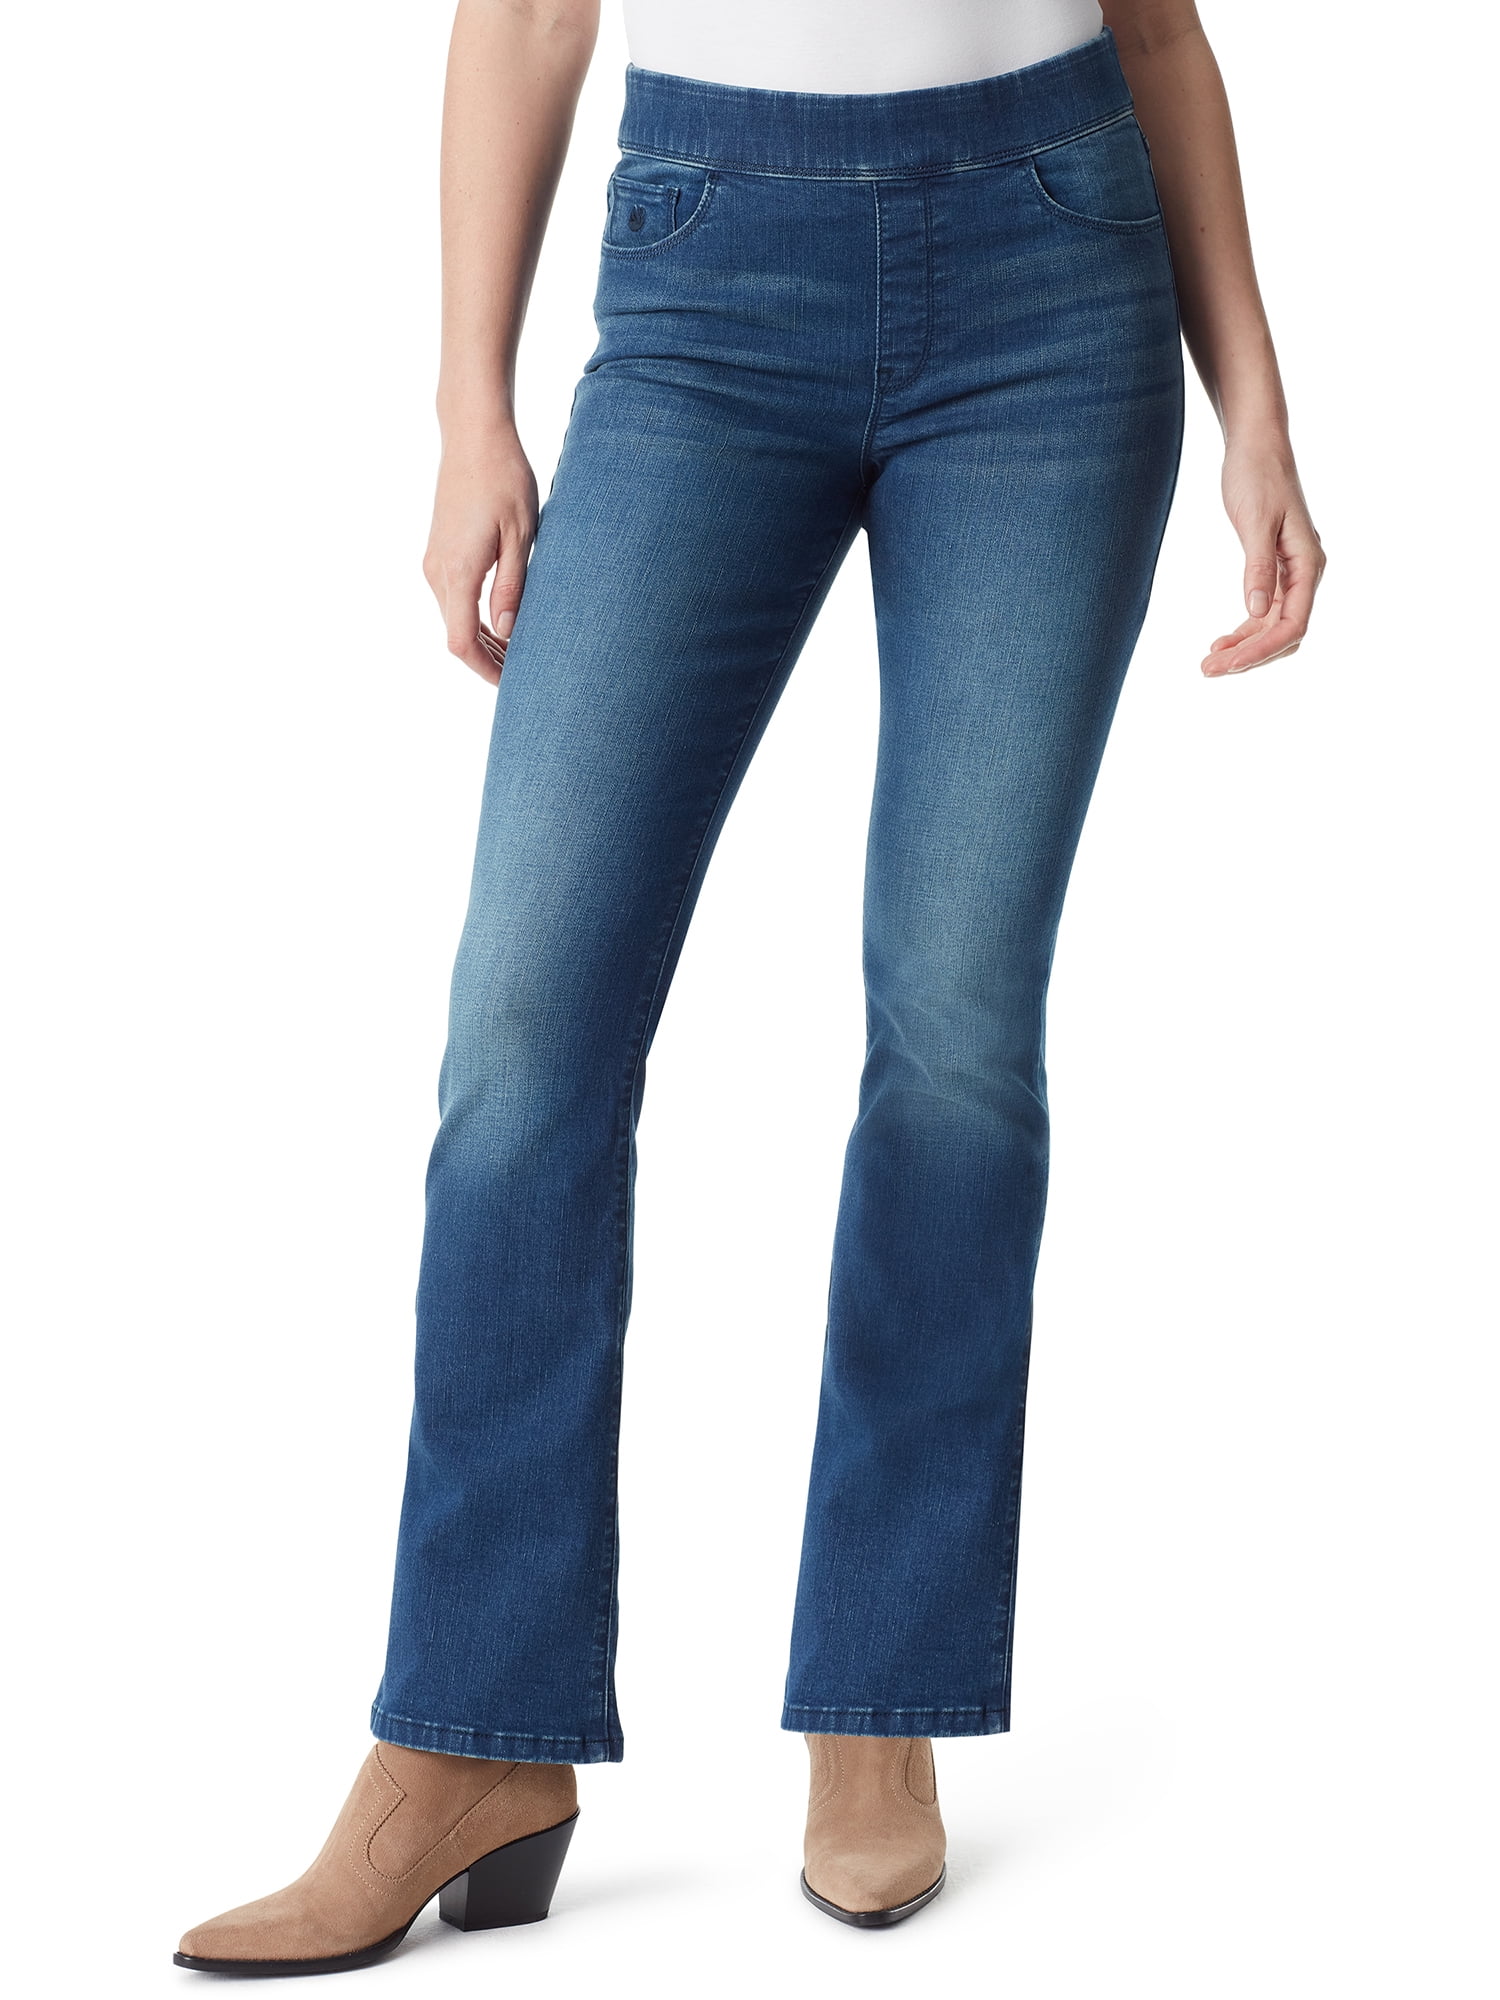 Gloria Vanderbilt Women S Amanda Pull On Boot Jean Regular And Short Inseams Walmart Com